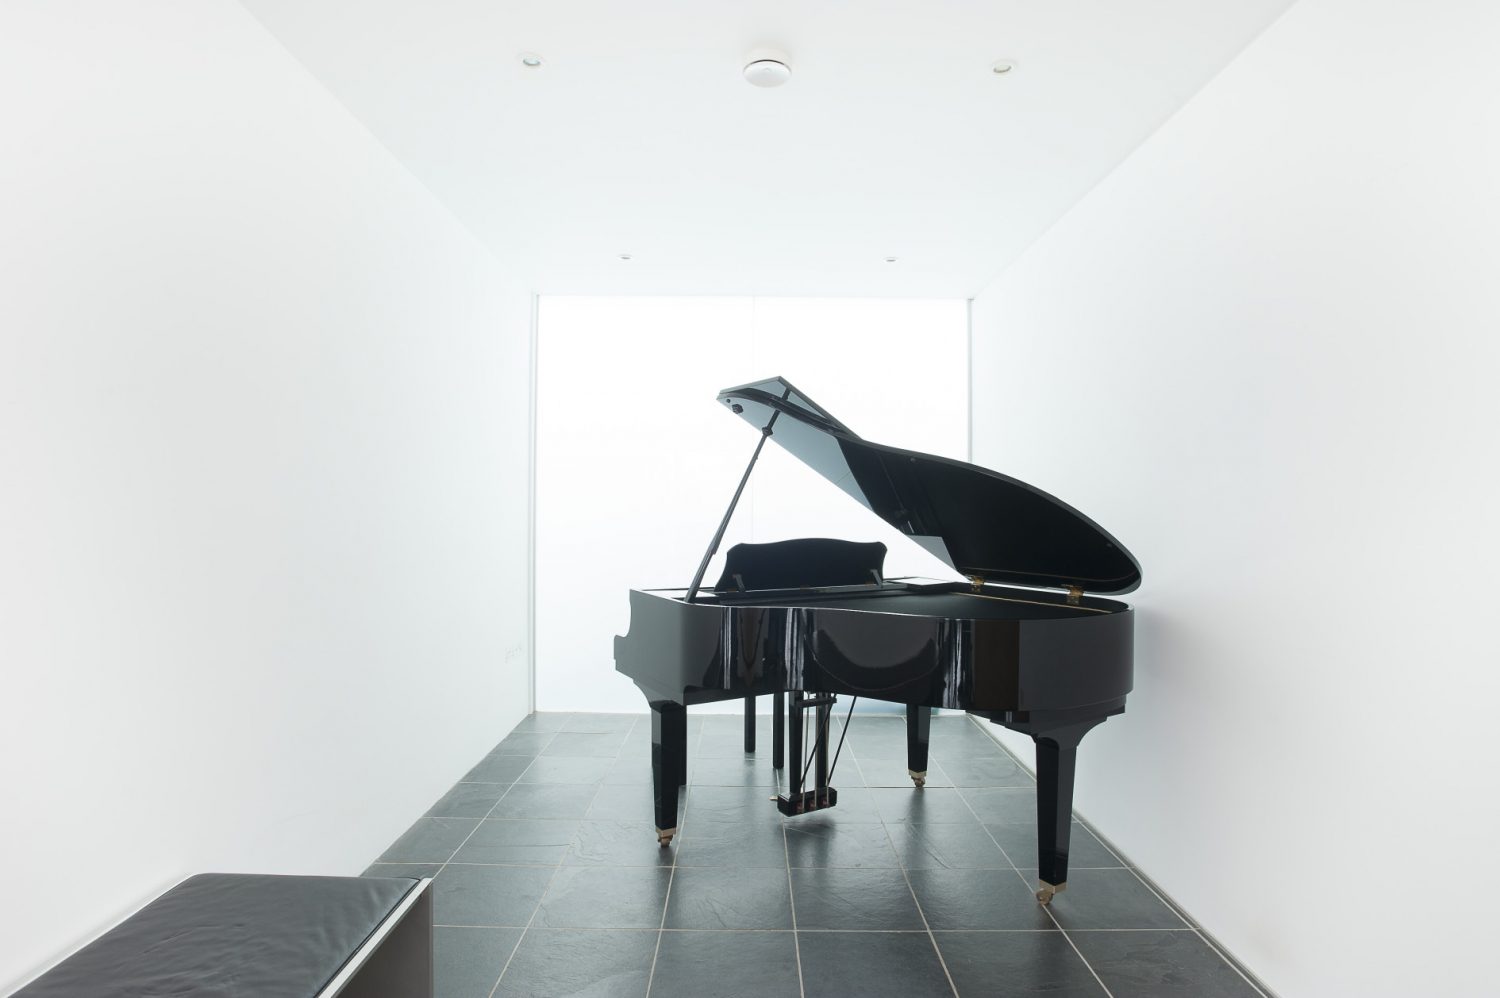 Heather’s music room is home to her Yamaha digital grand piano